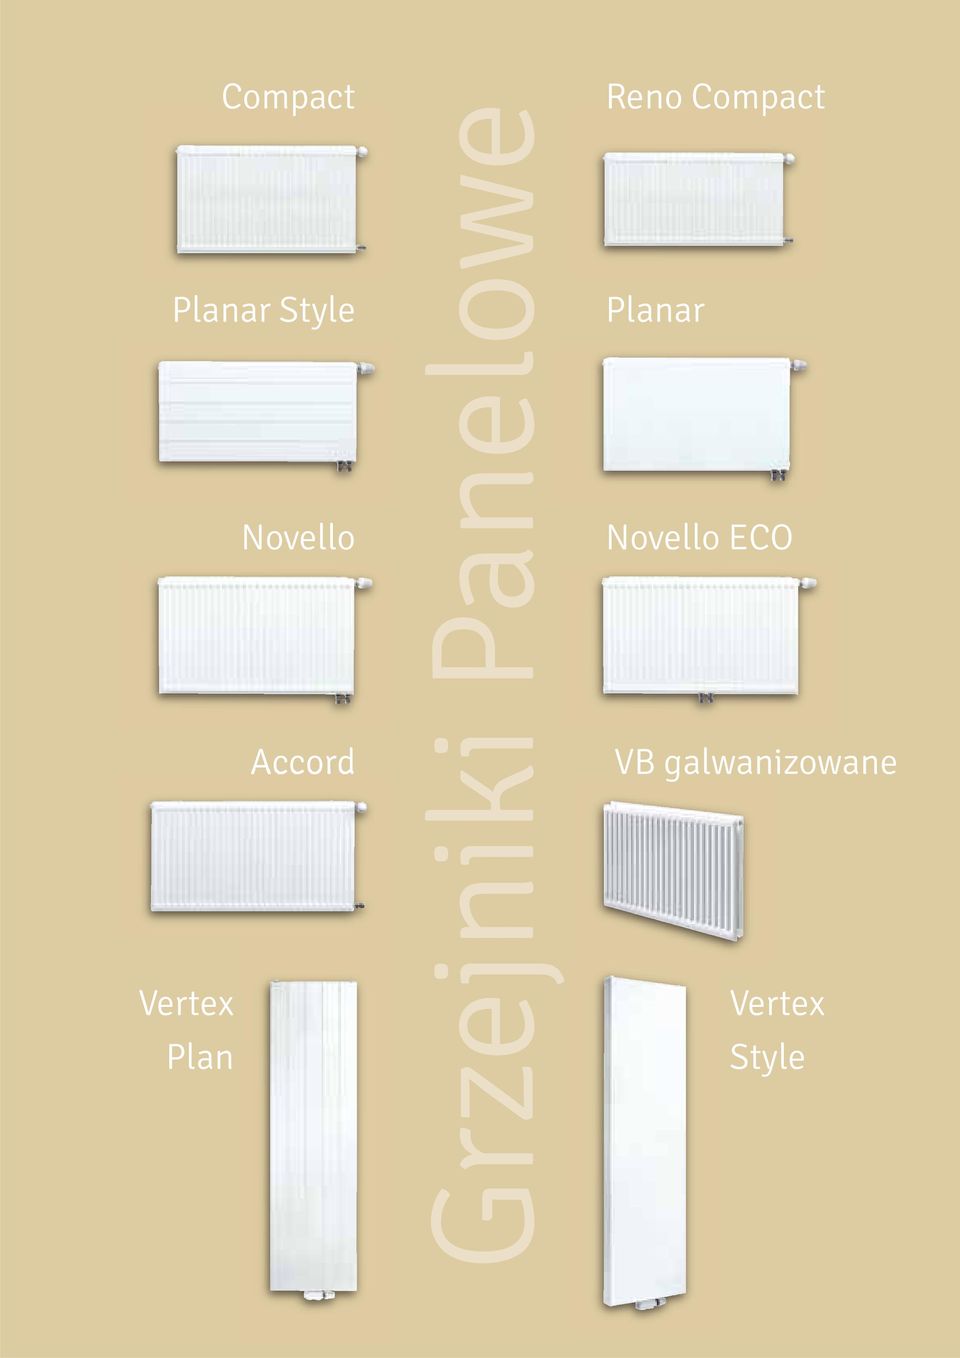 Panelowe Reno Compact Planar